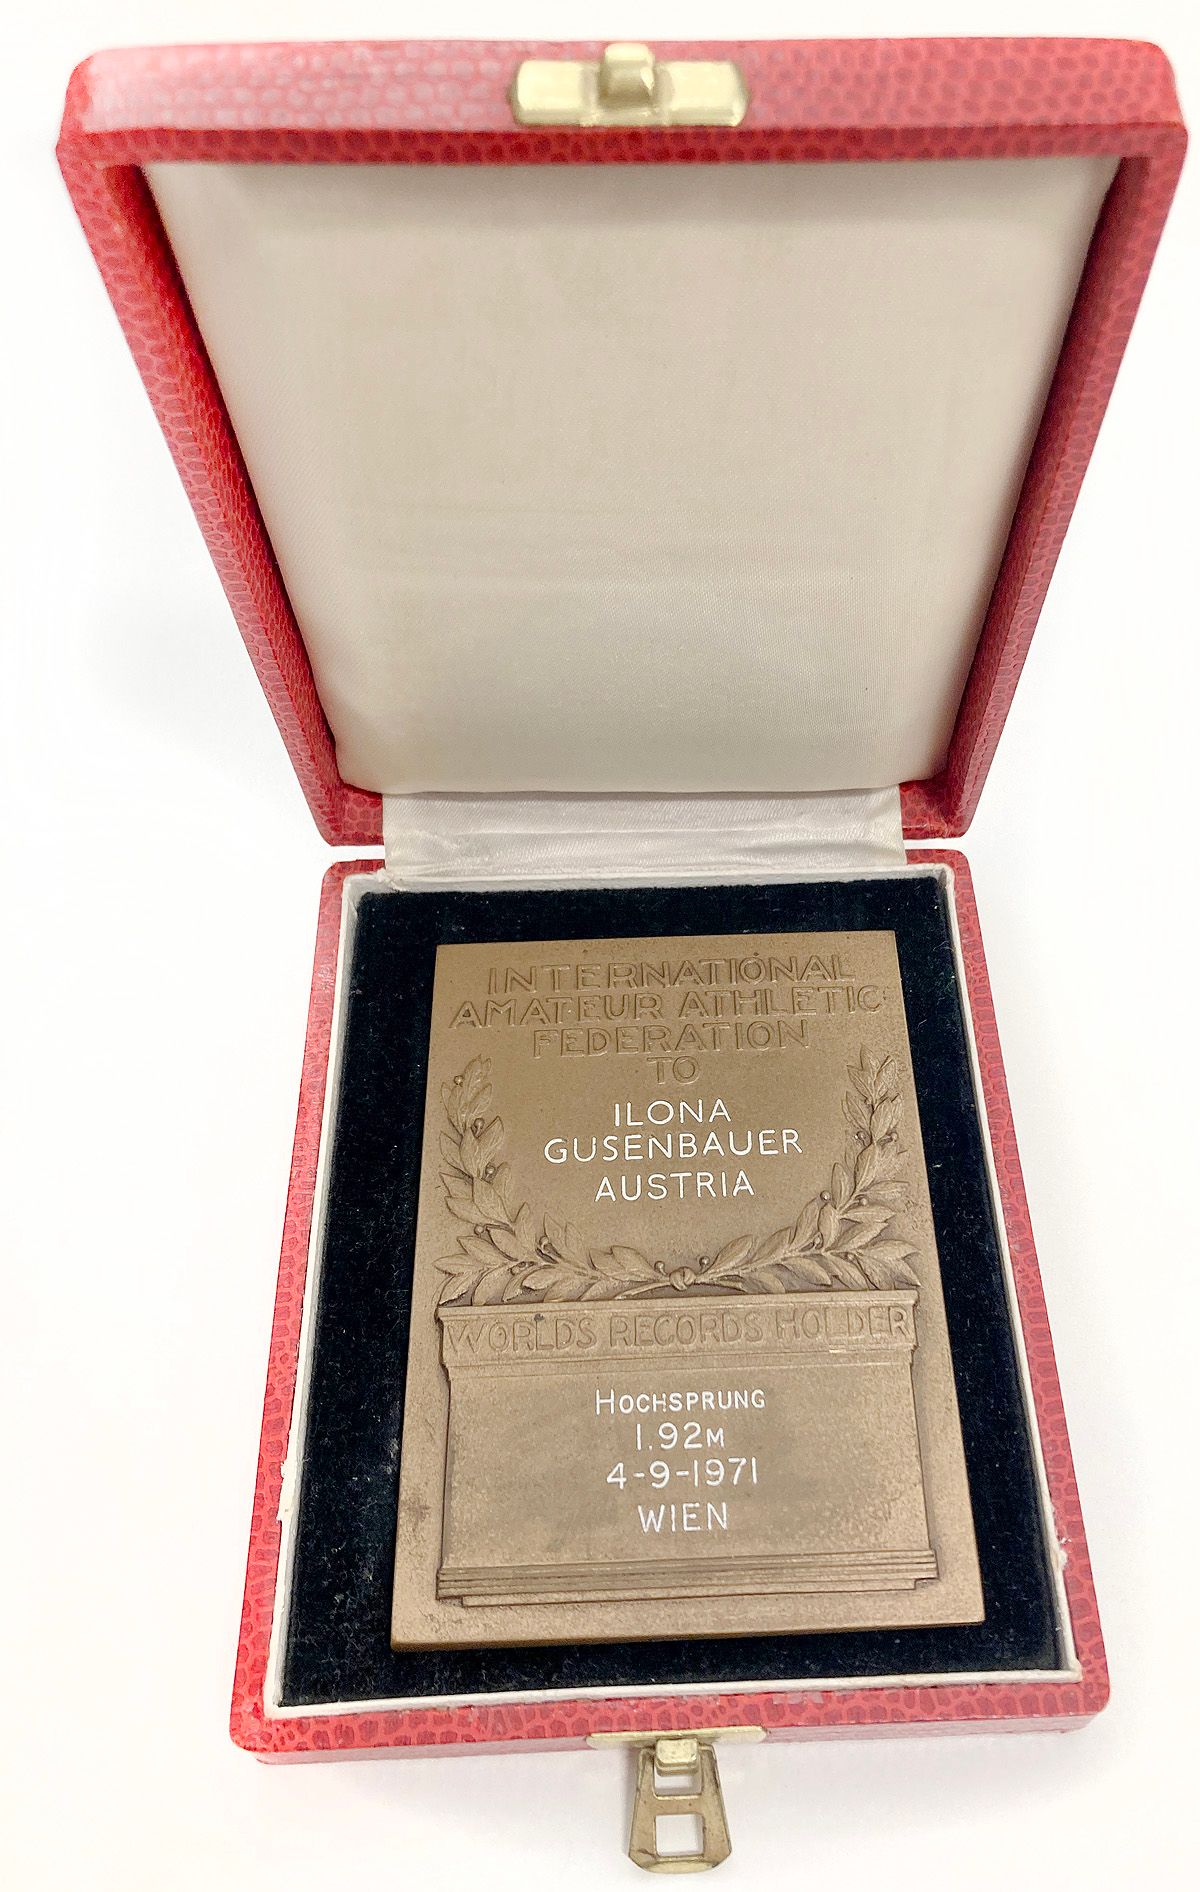 Gusenbauer's world record plaque